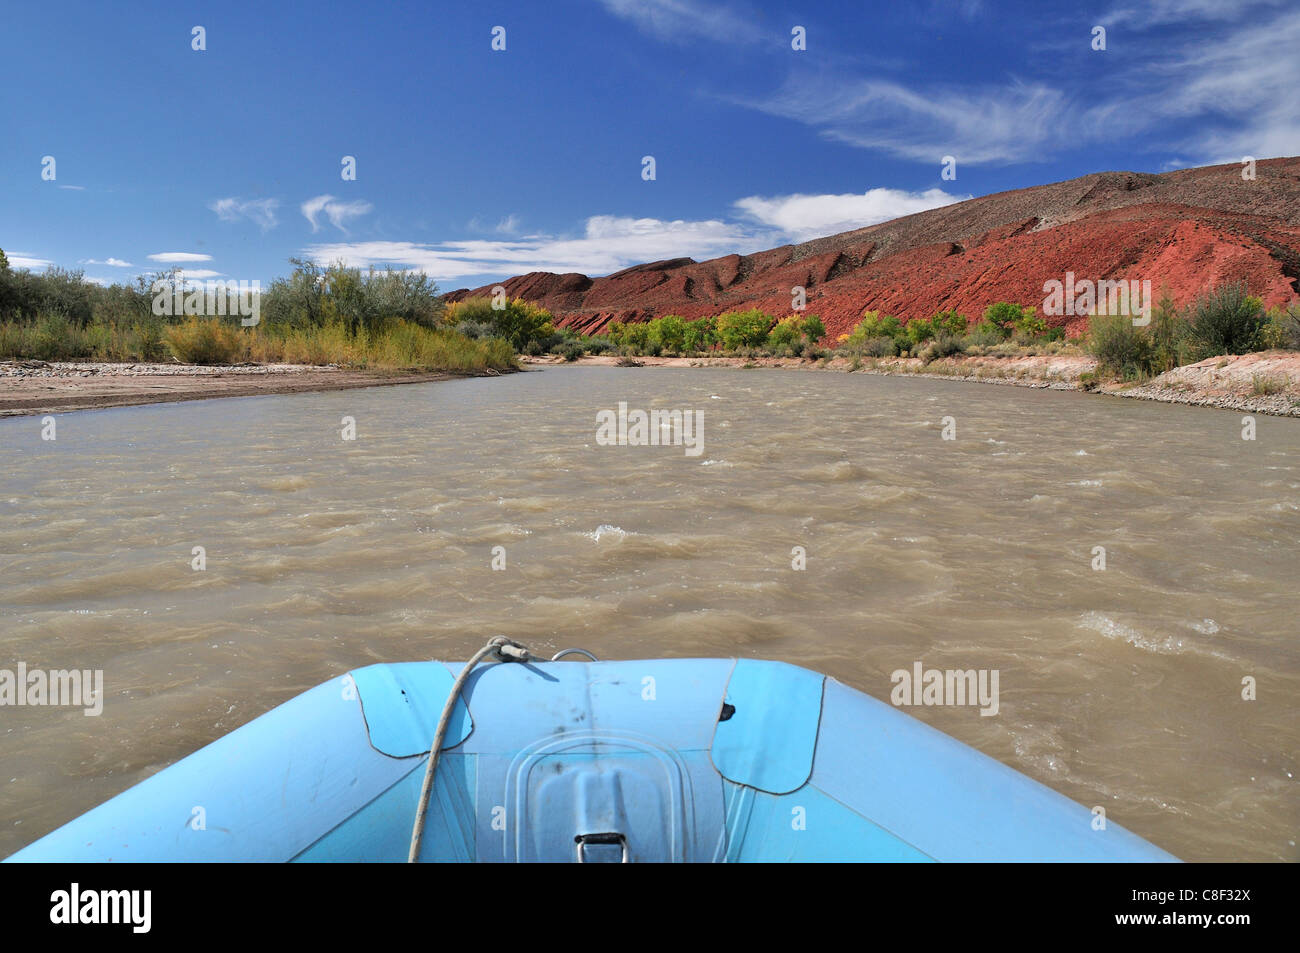 Il fiume San Juan, vicino a Bluff, fiume, paesaggio, Colorado Plateau, Utah, Stati Uniti d'America, Stati Uniti, America, rafting, barca in gomma Foto Stock